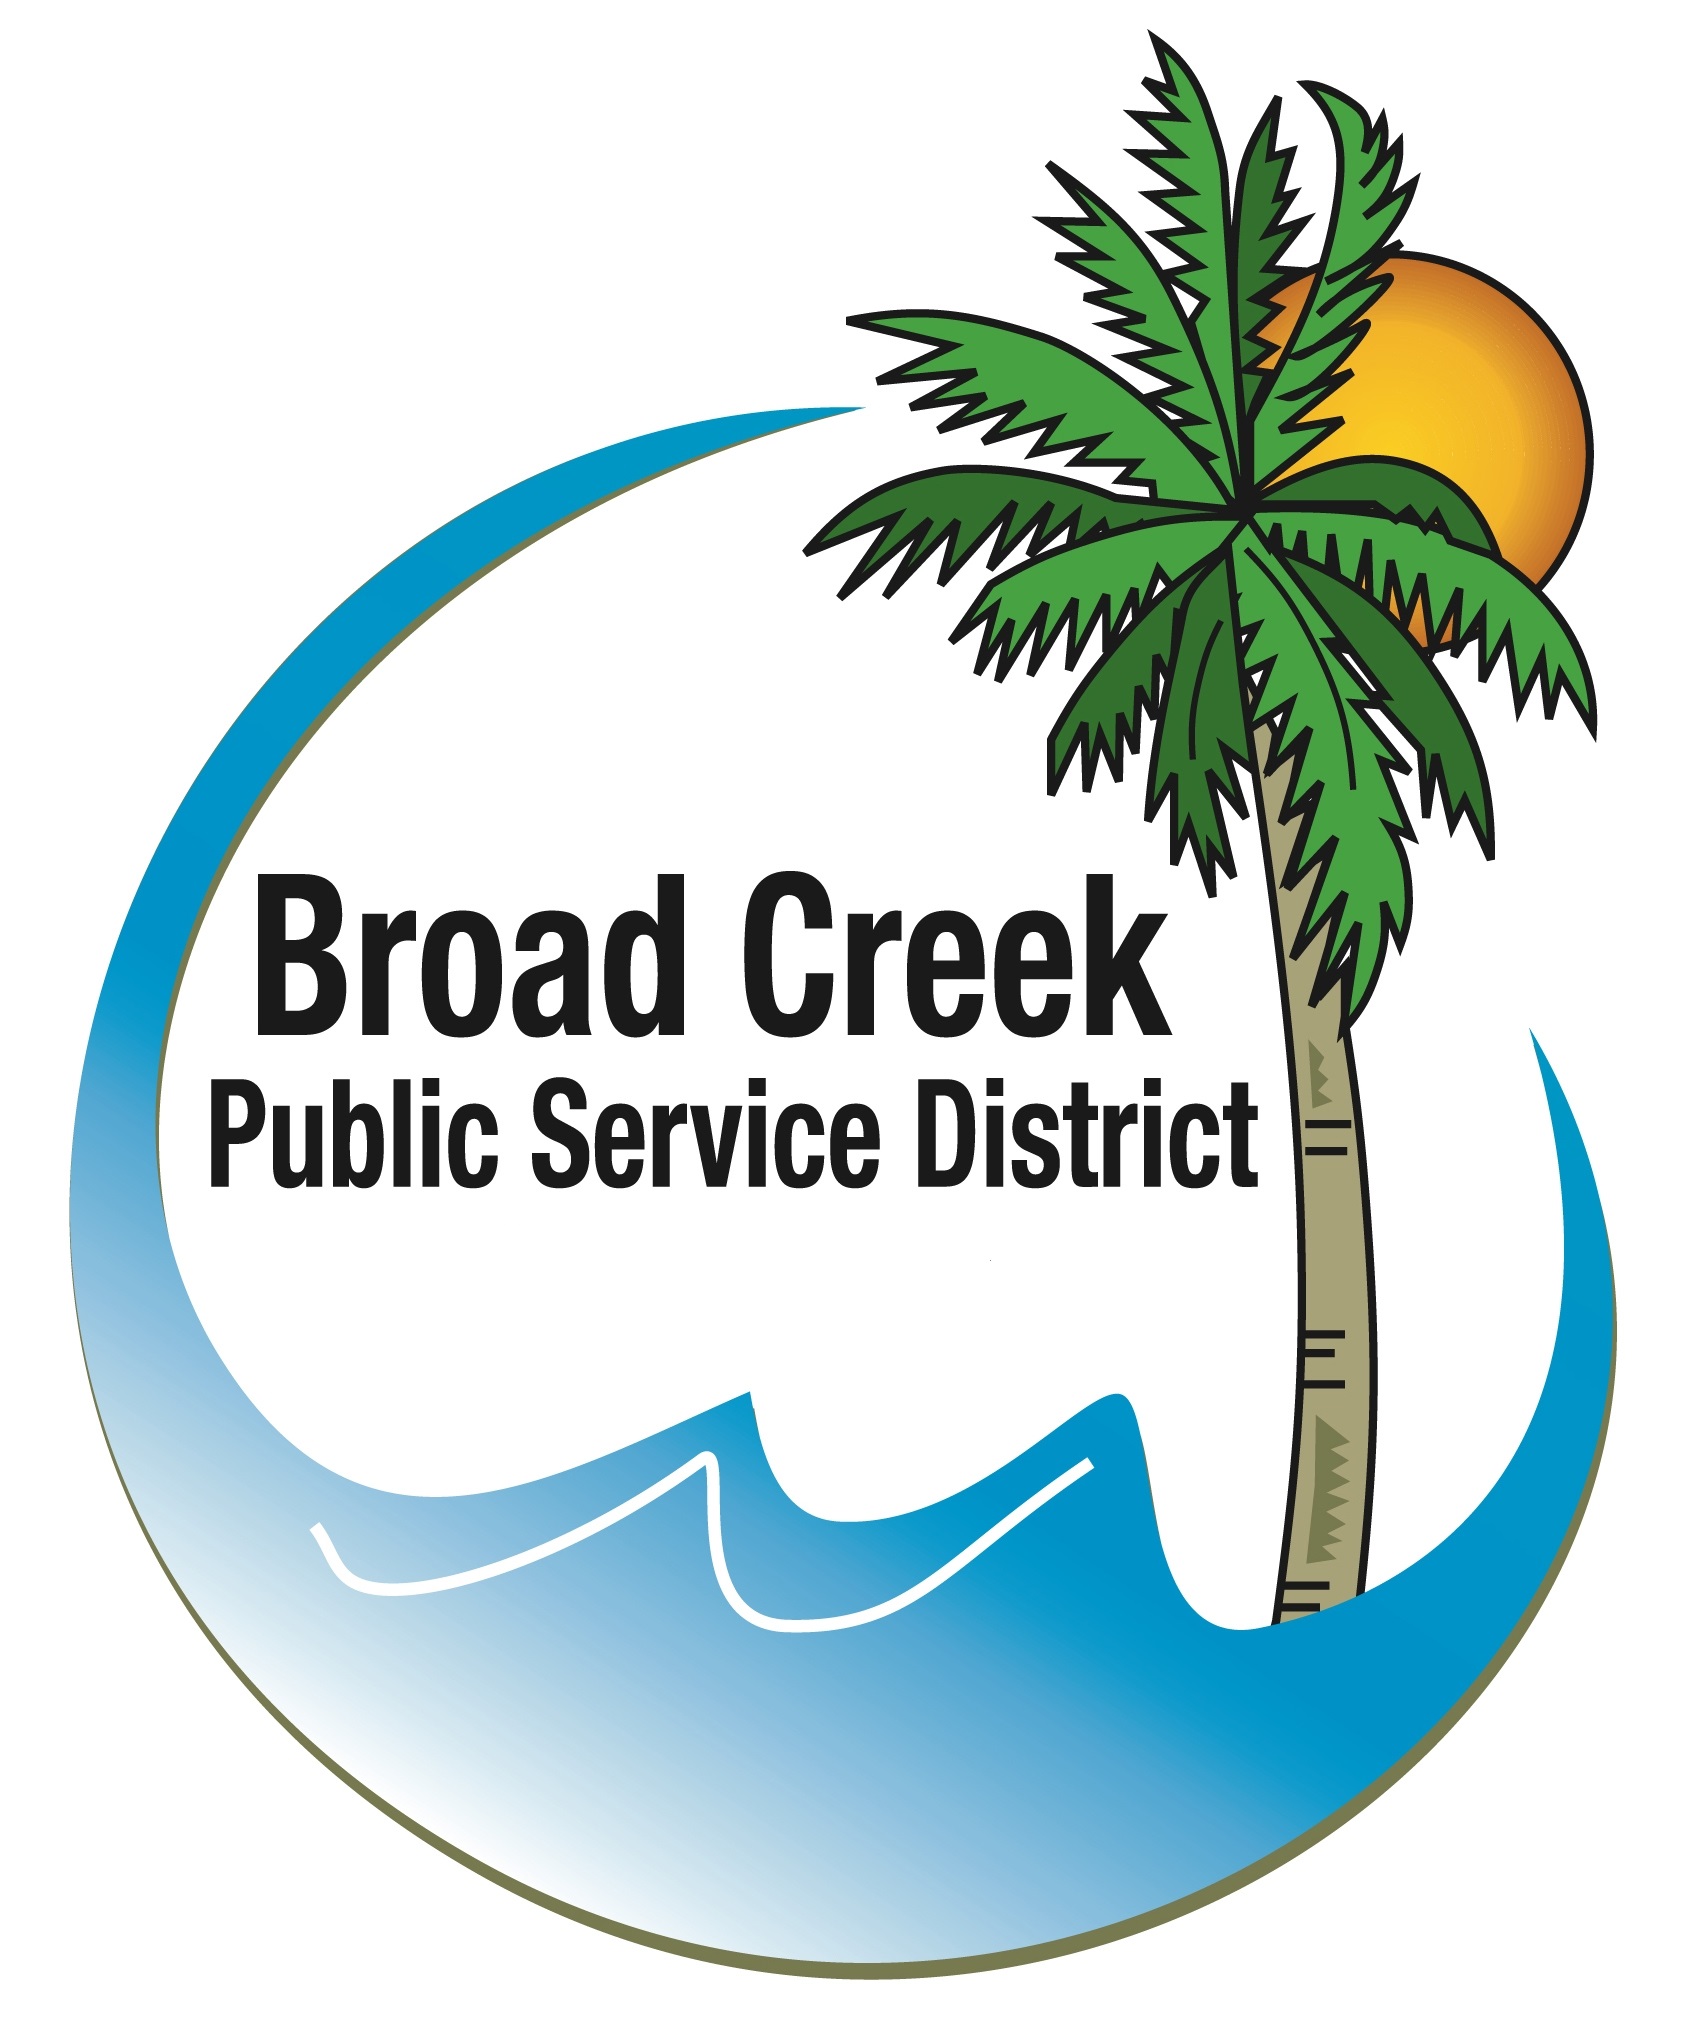 Broad Creek Public Service District